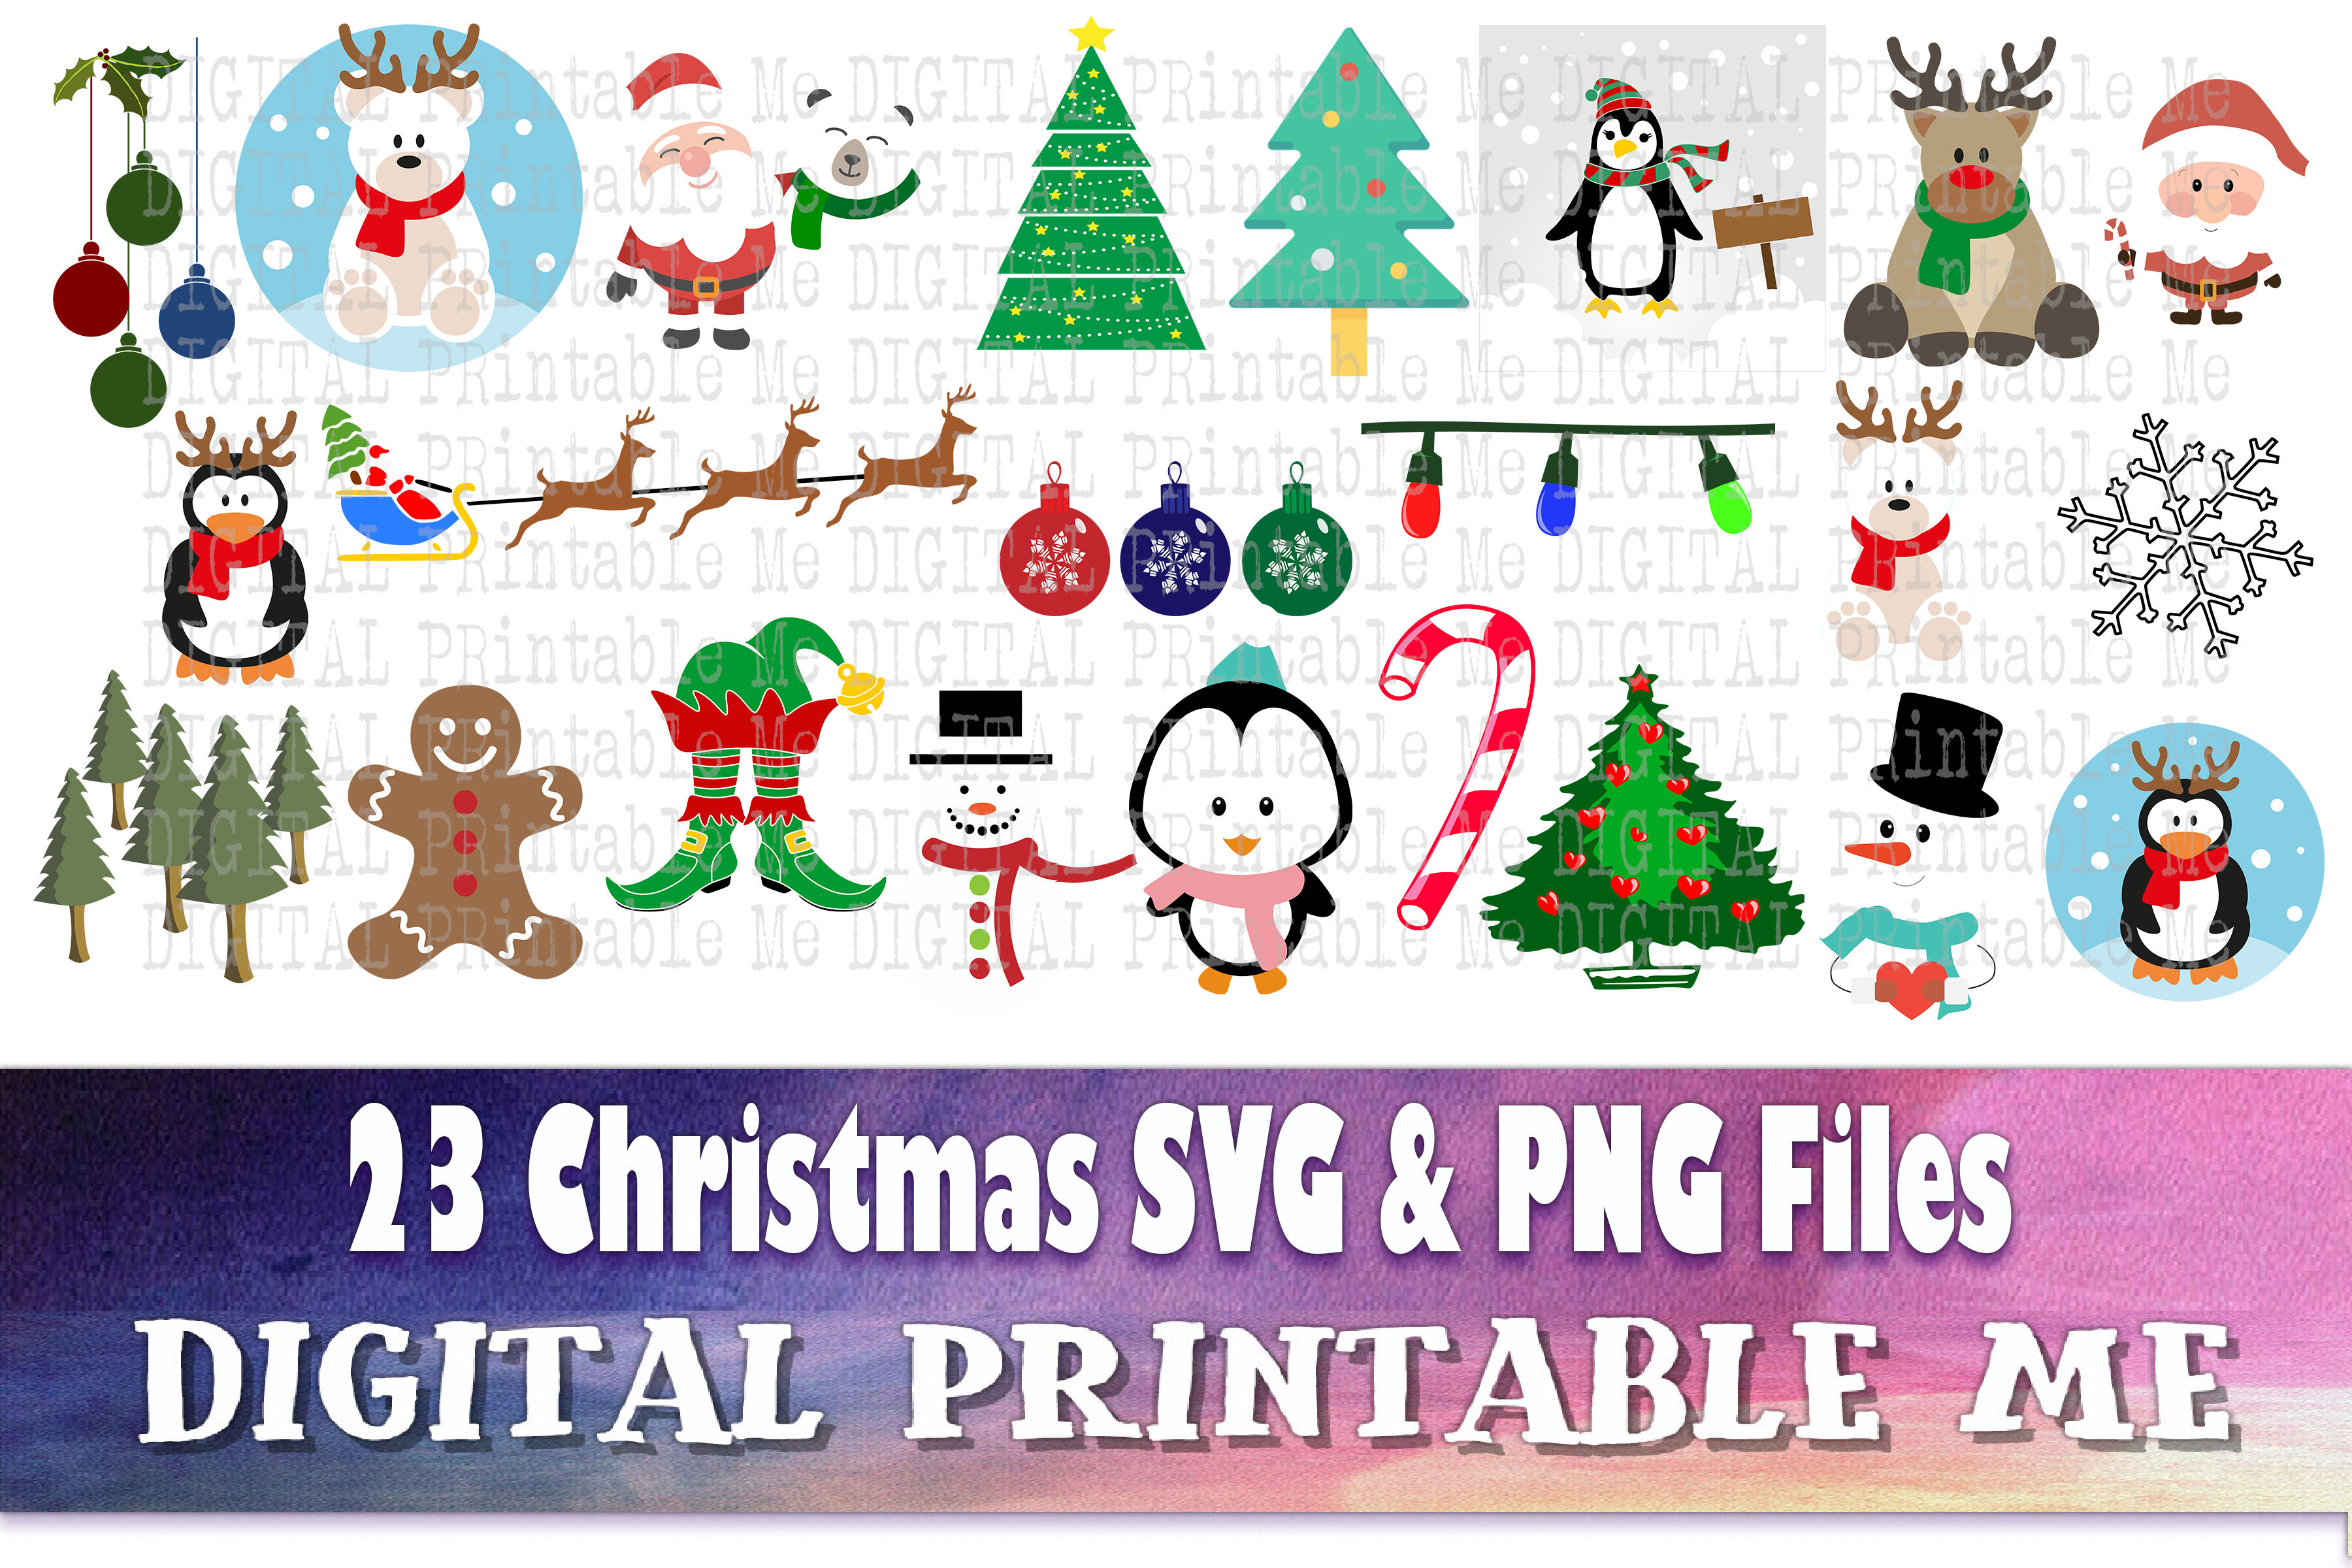 Download Christmas Svg Bundle Png Clip Art Pack 23 Images Pack Instant Dow By Digitalprintableme Thehungryjpeg Com